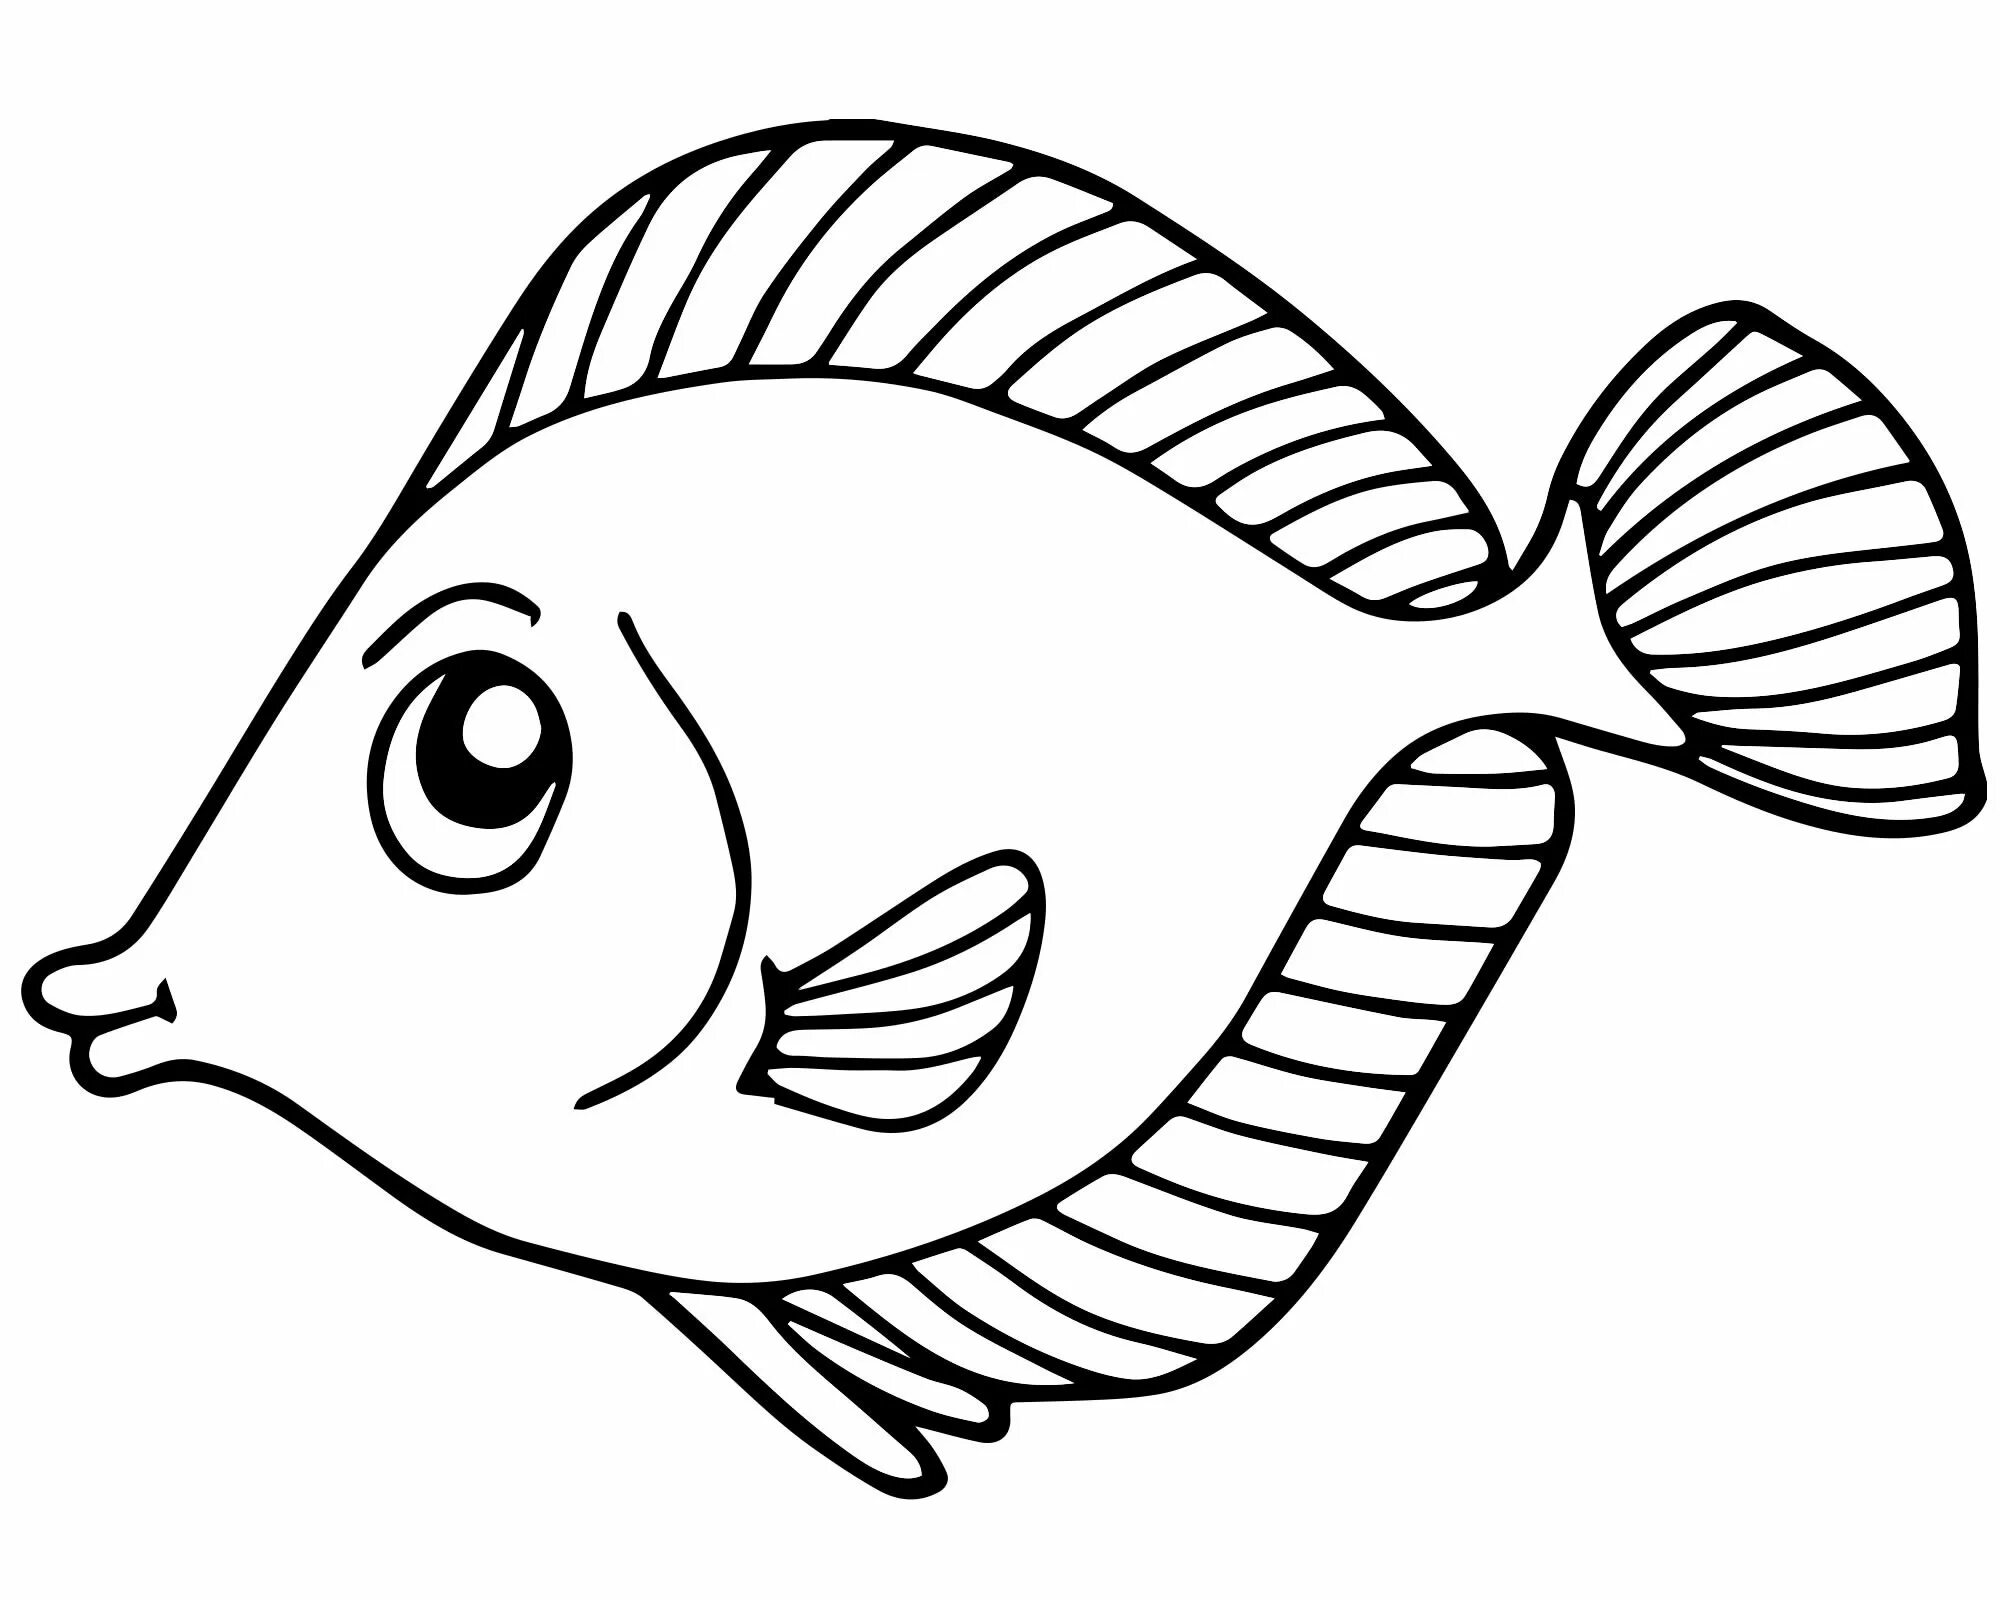 Рыба раскраска для детей